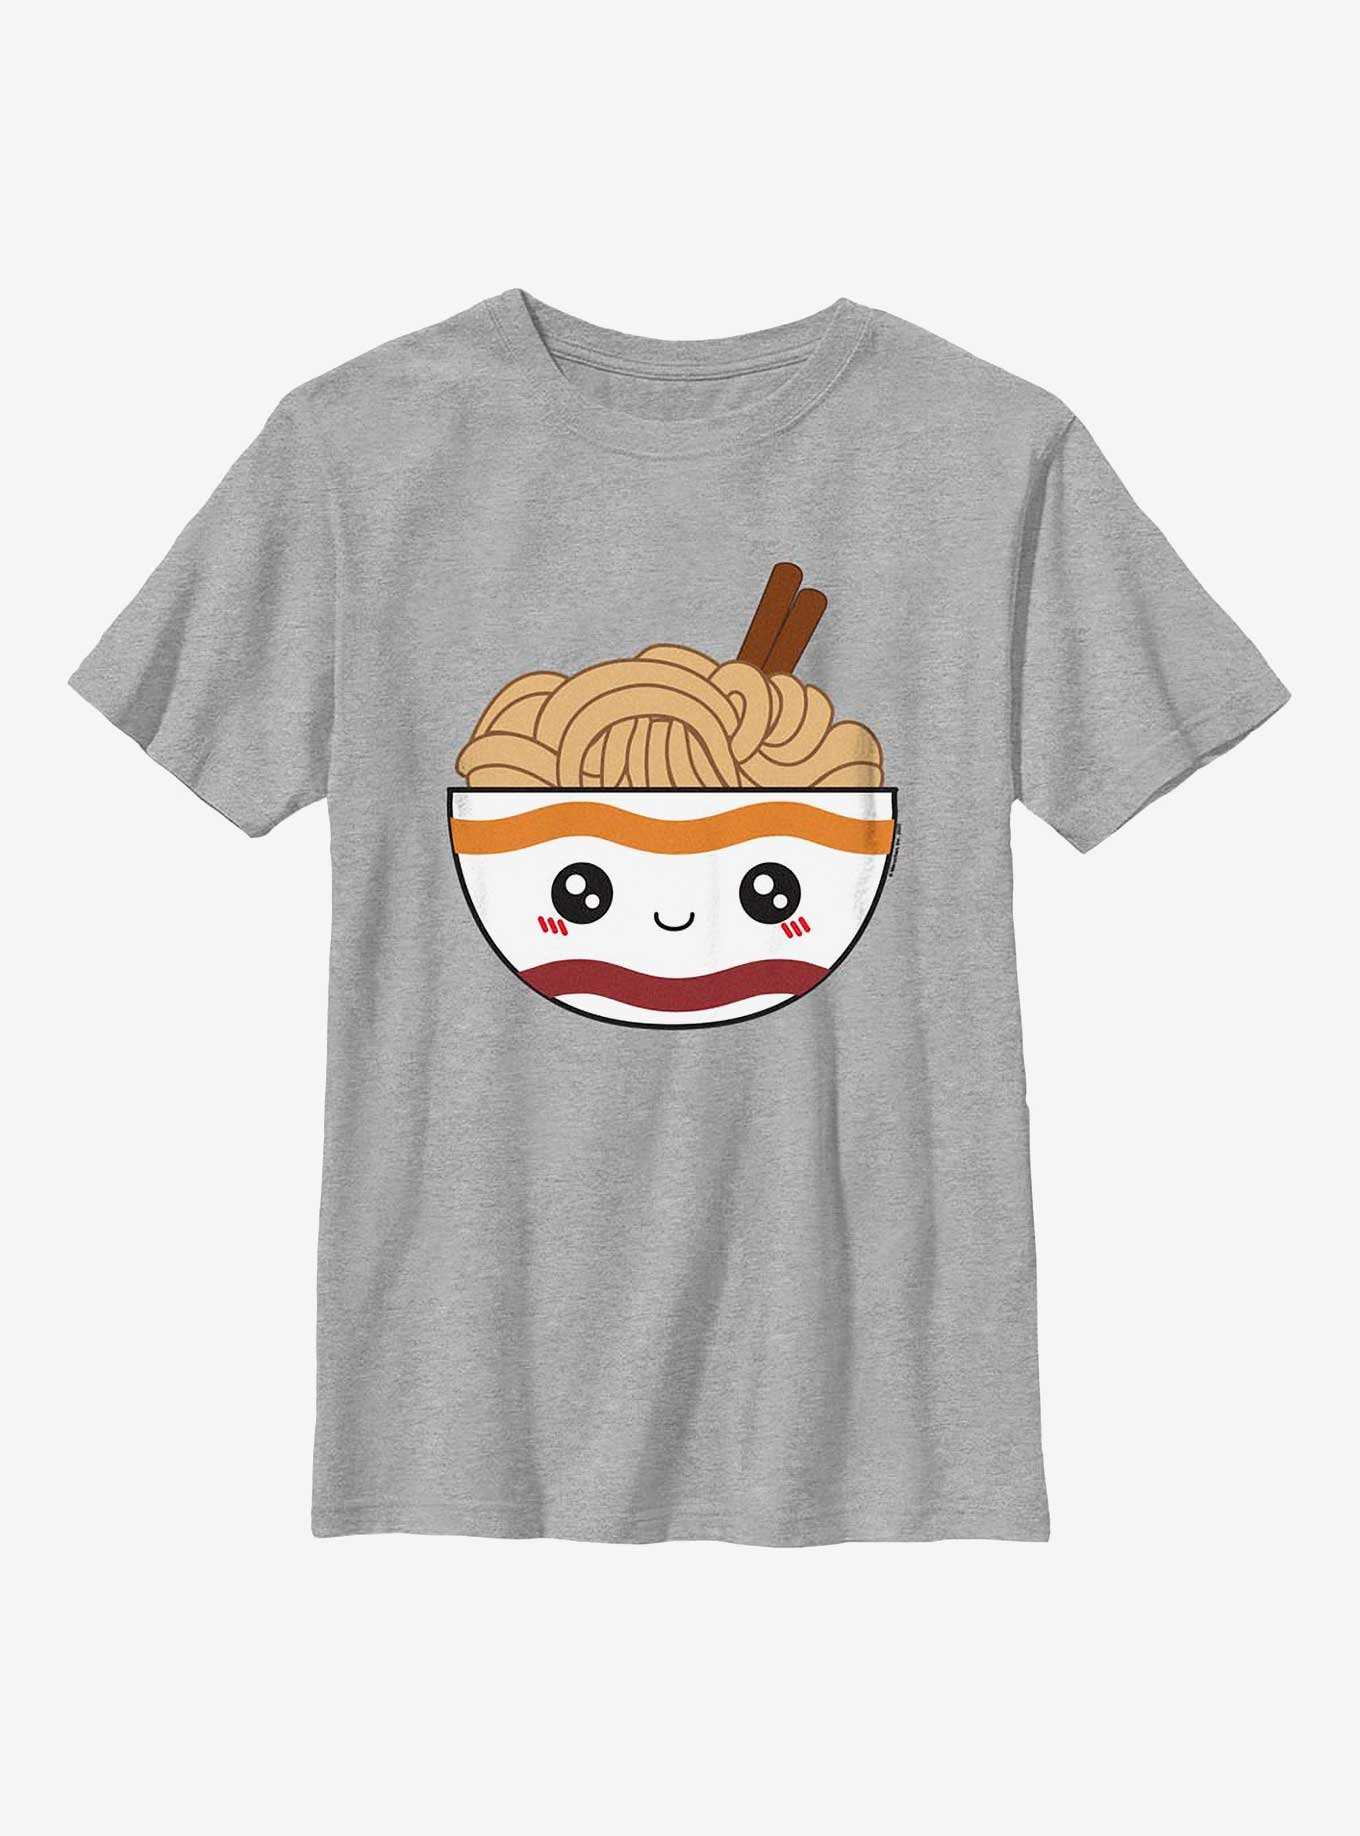 Maruchan Noodle Bowl Youth T-Shirt, , hi-res